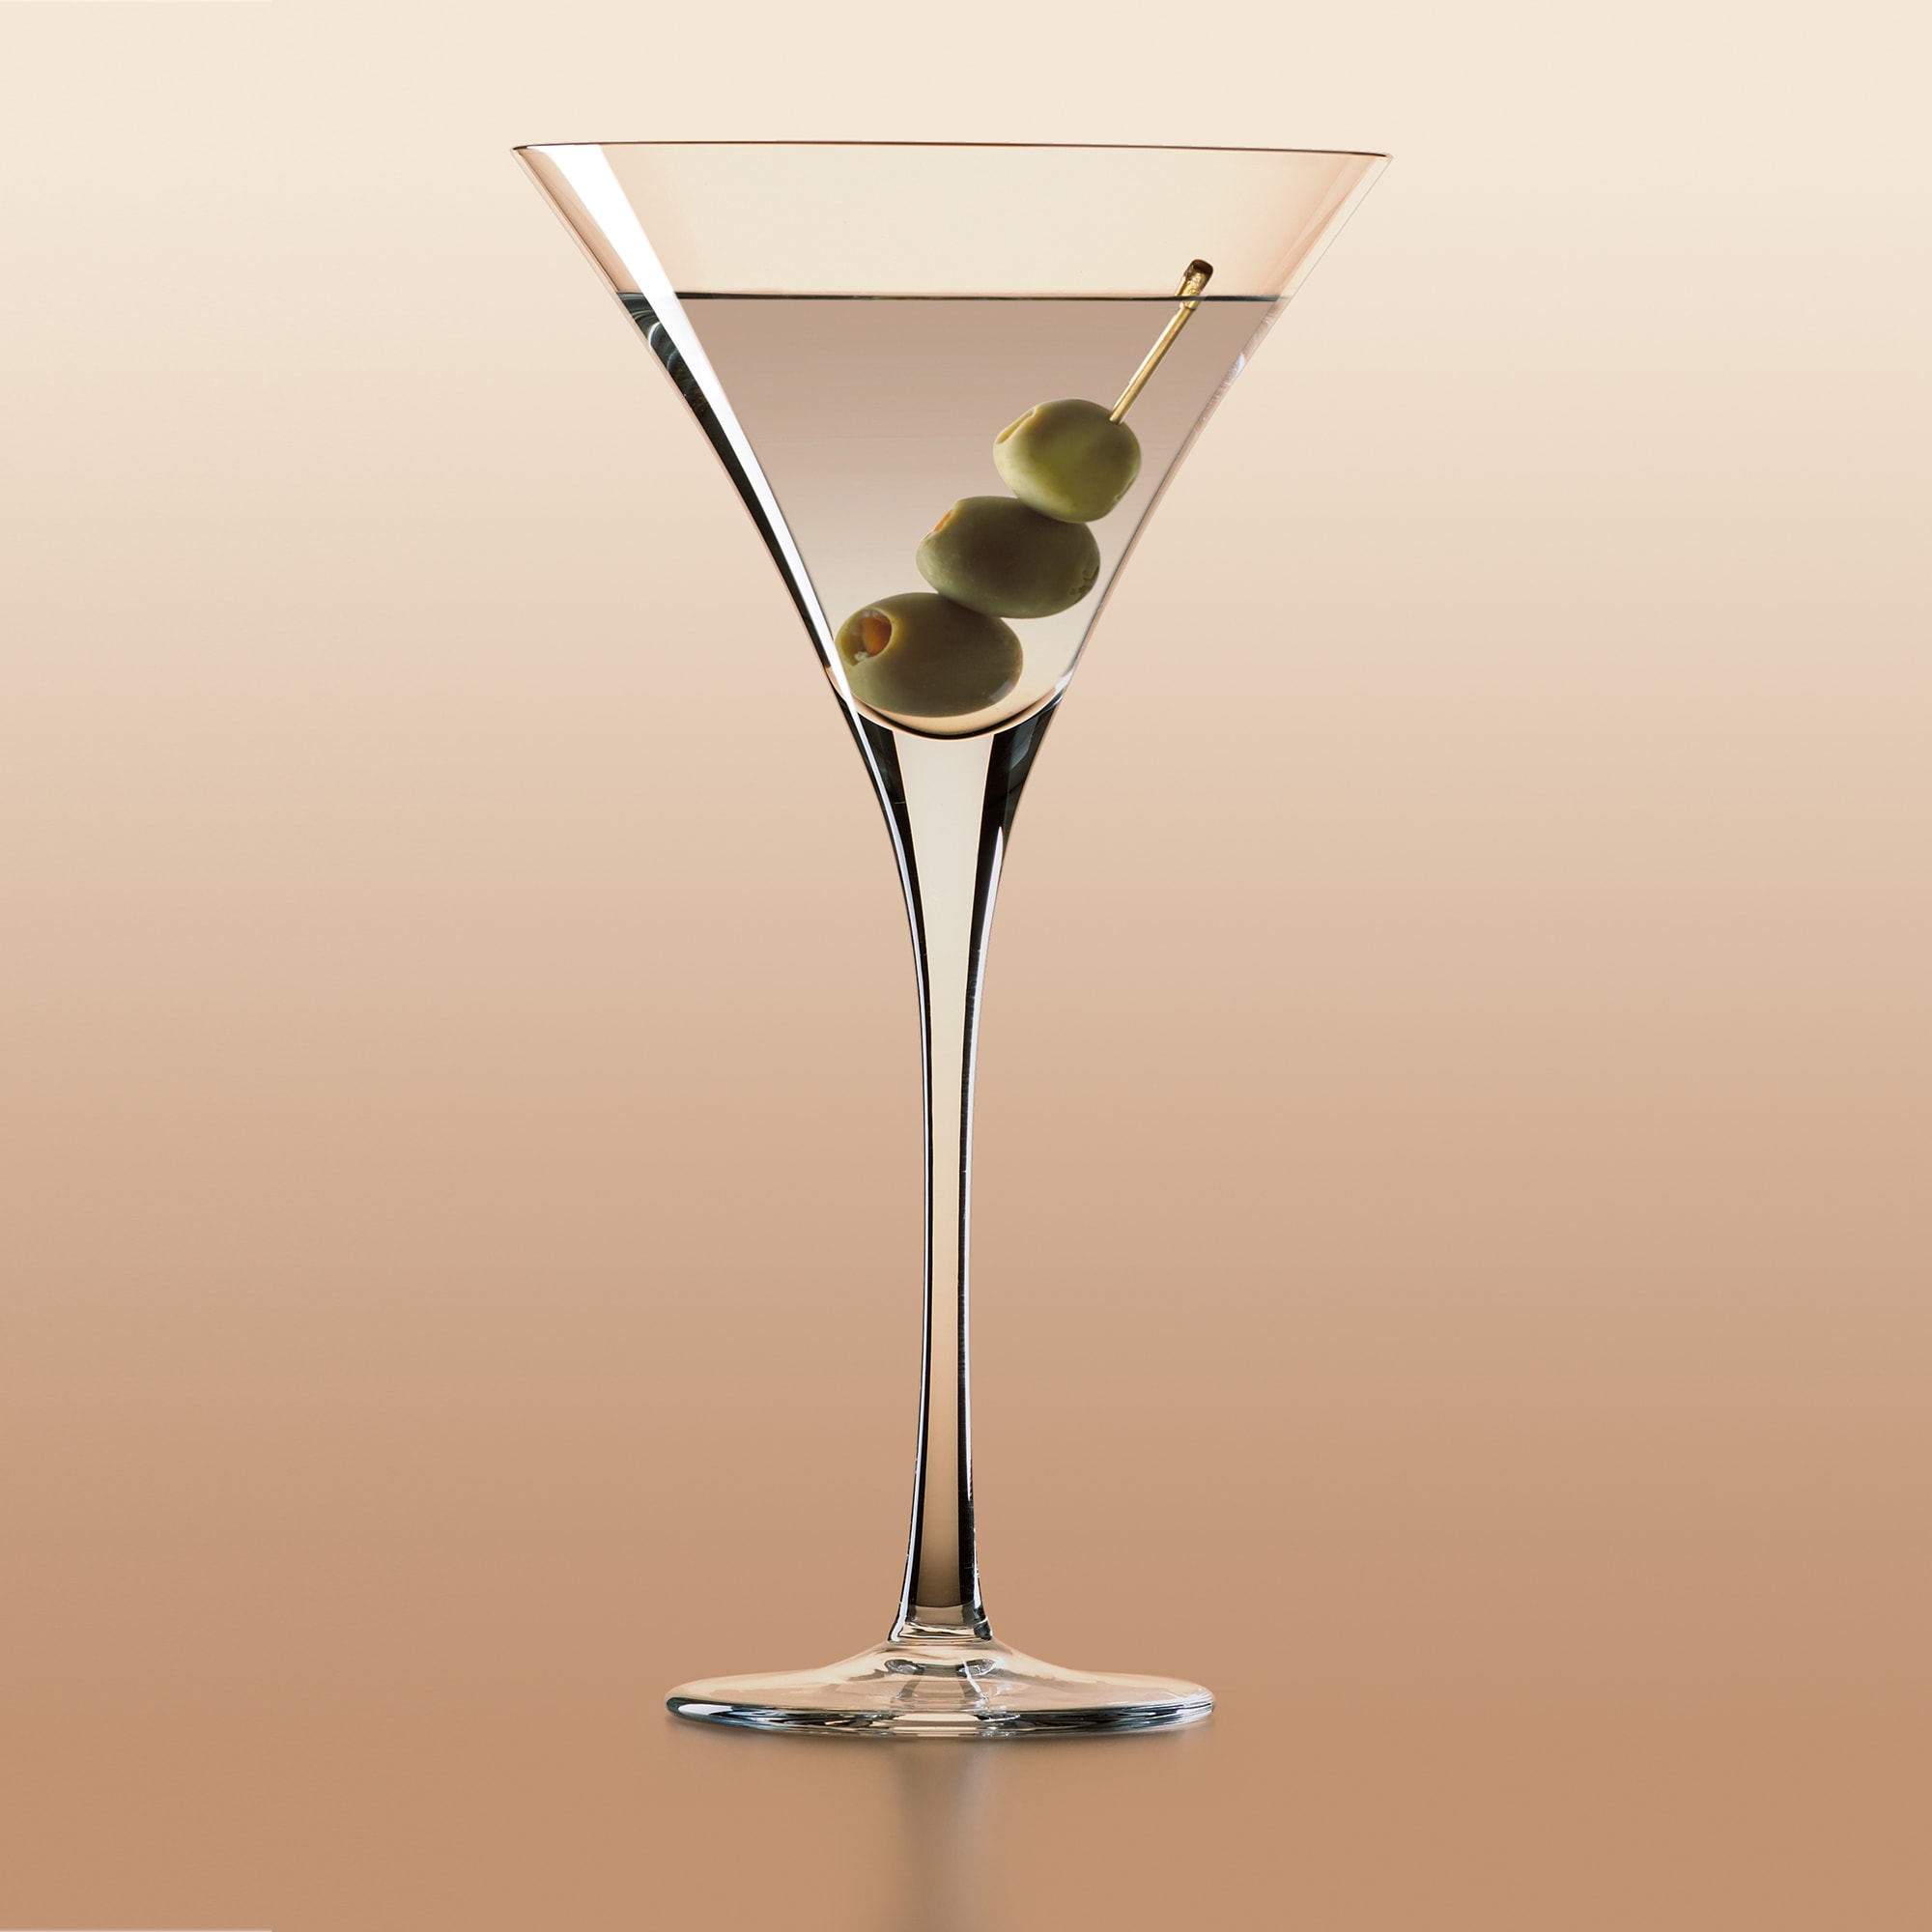 Lenox Tuscany Classics Martini (Set of 4)